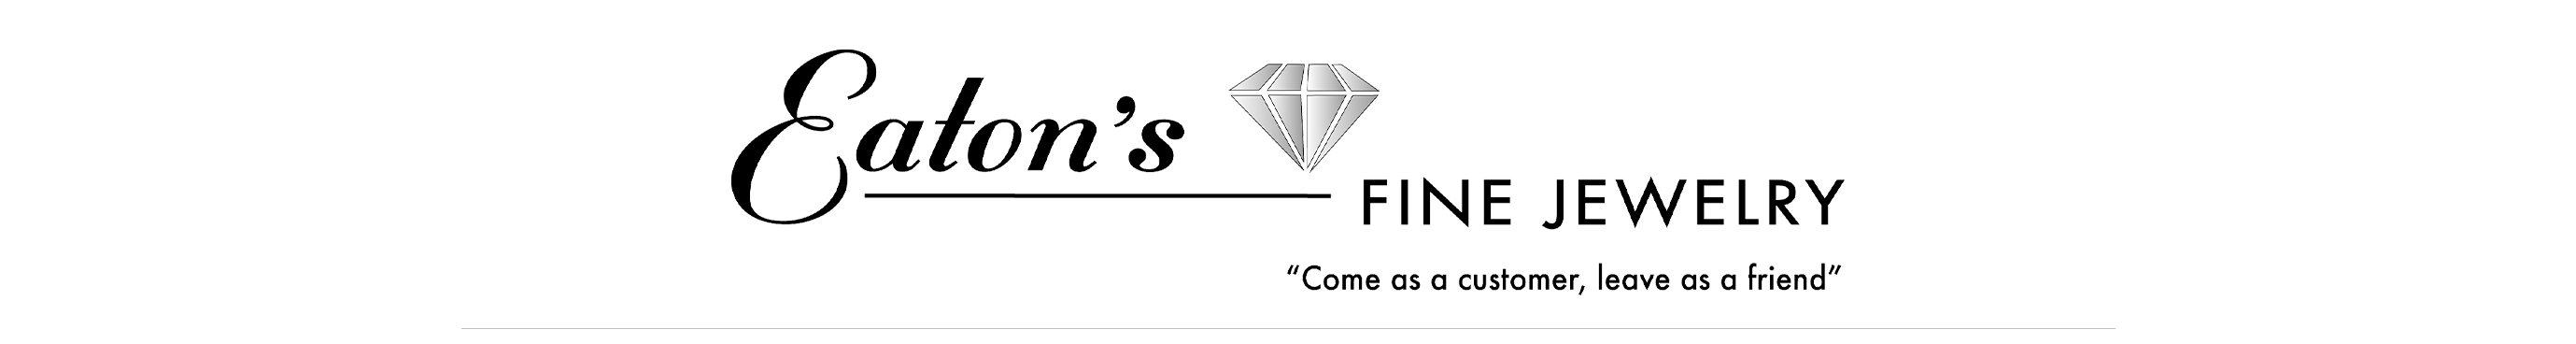 St. Albans, VT Jewelry Store & Repair | Eaton's Jewelry Logo